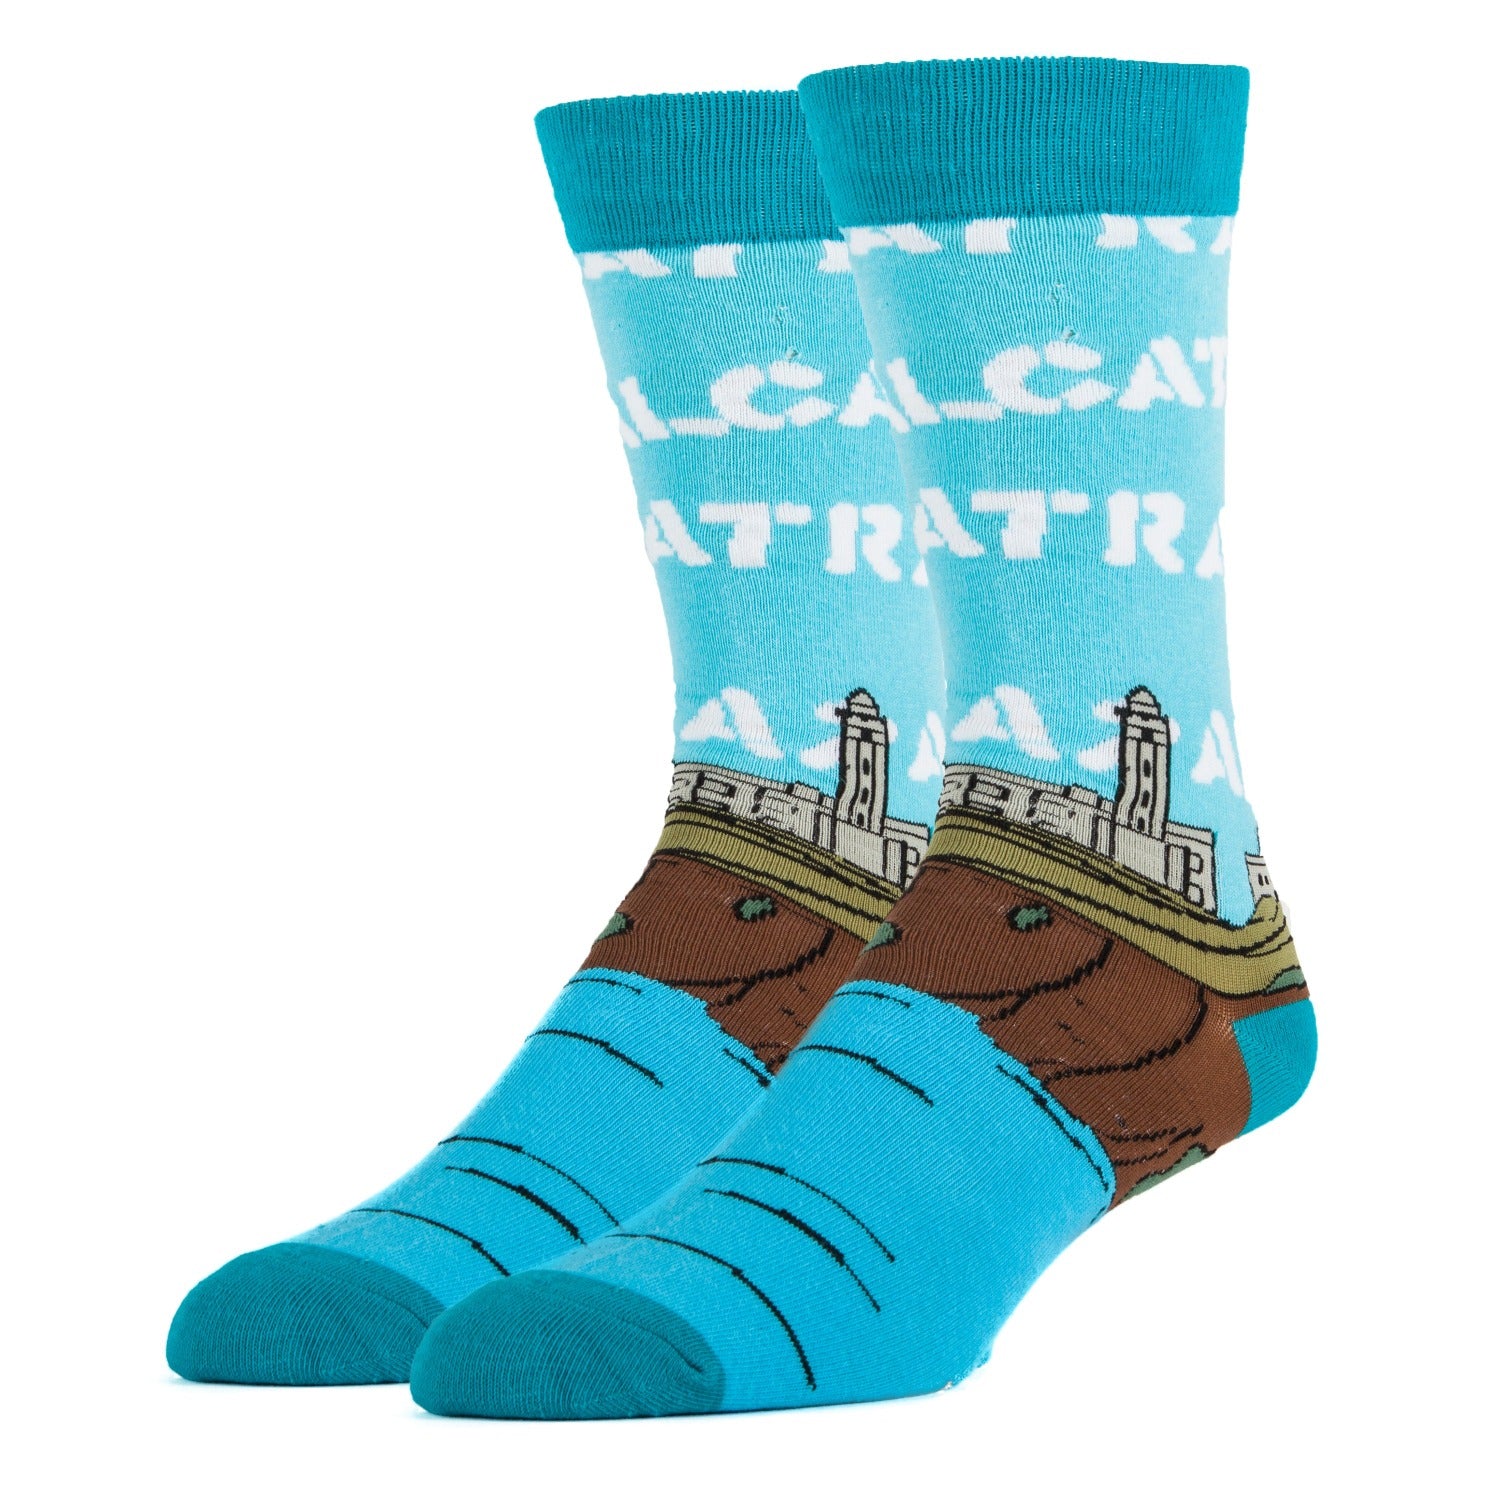 Alcatraz Socks | Novelty Crew Socks For Men